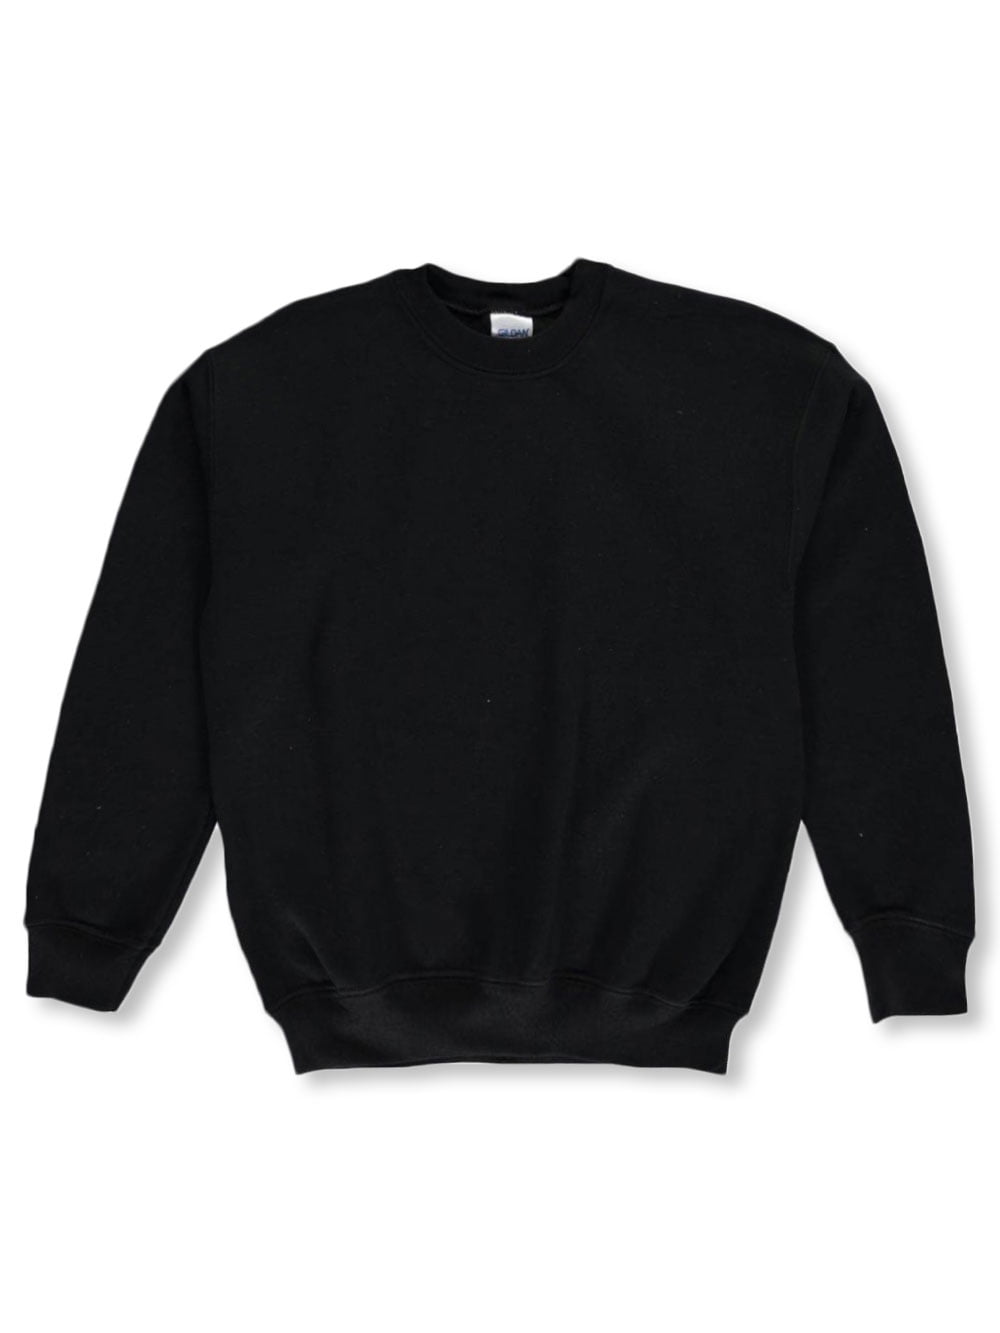 Gildan Unisex Youth Crewneck Sweatshirt (Sizes 4 - 20) - black, l/14-16  (Big Girls)